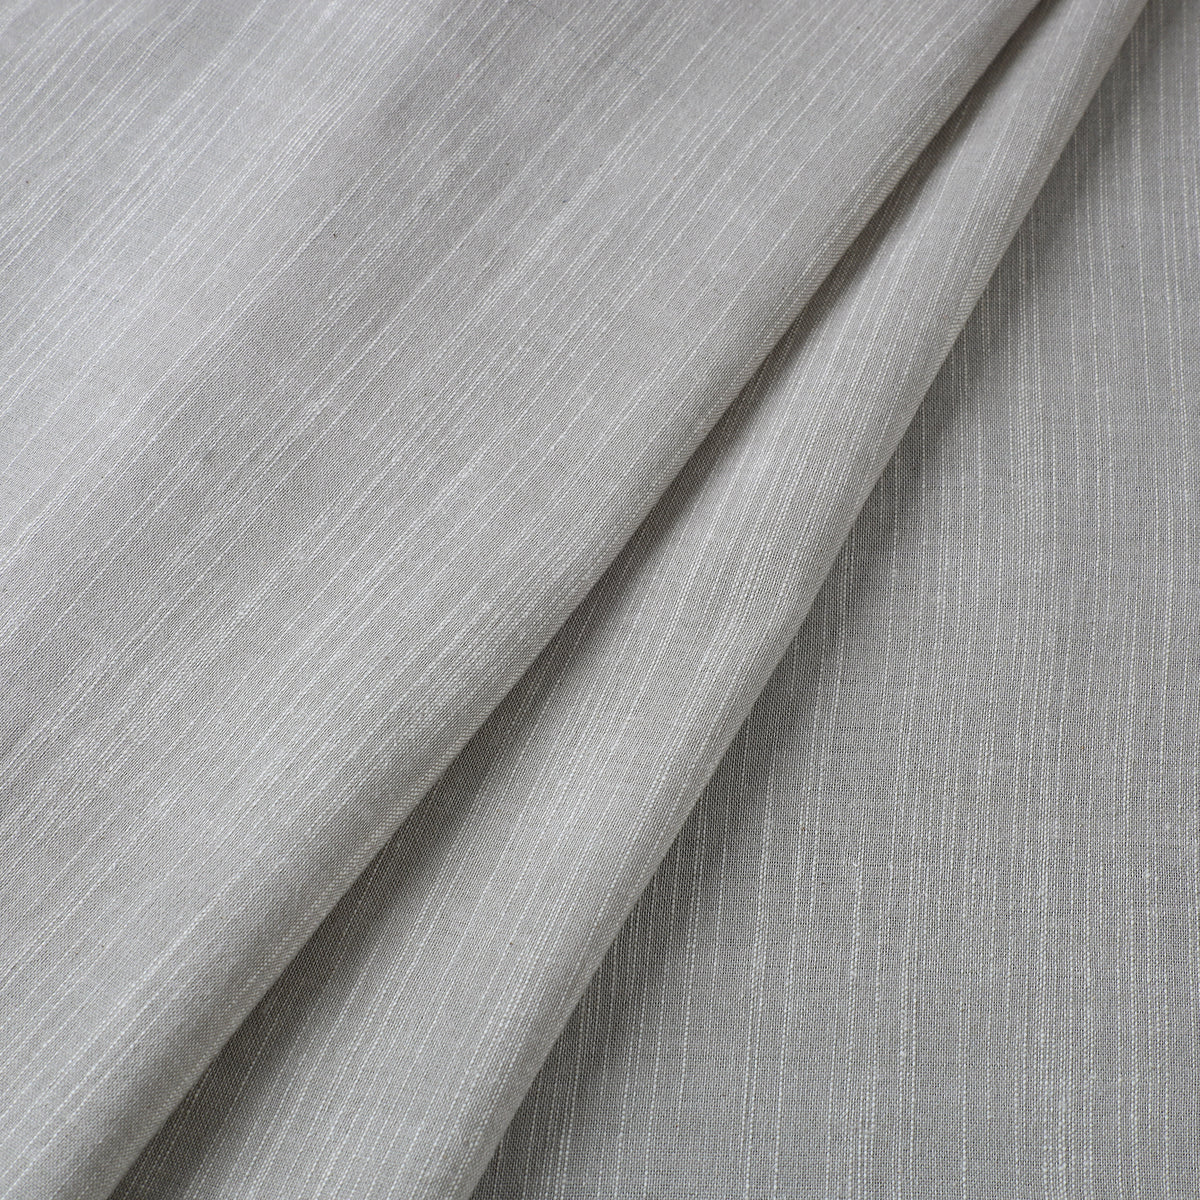 Grey - Jhiri Pure Handloom Cotton Fabric 08